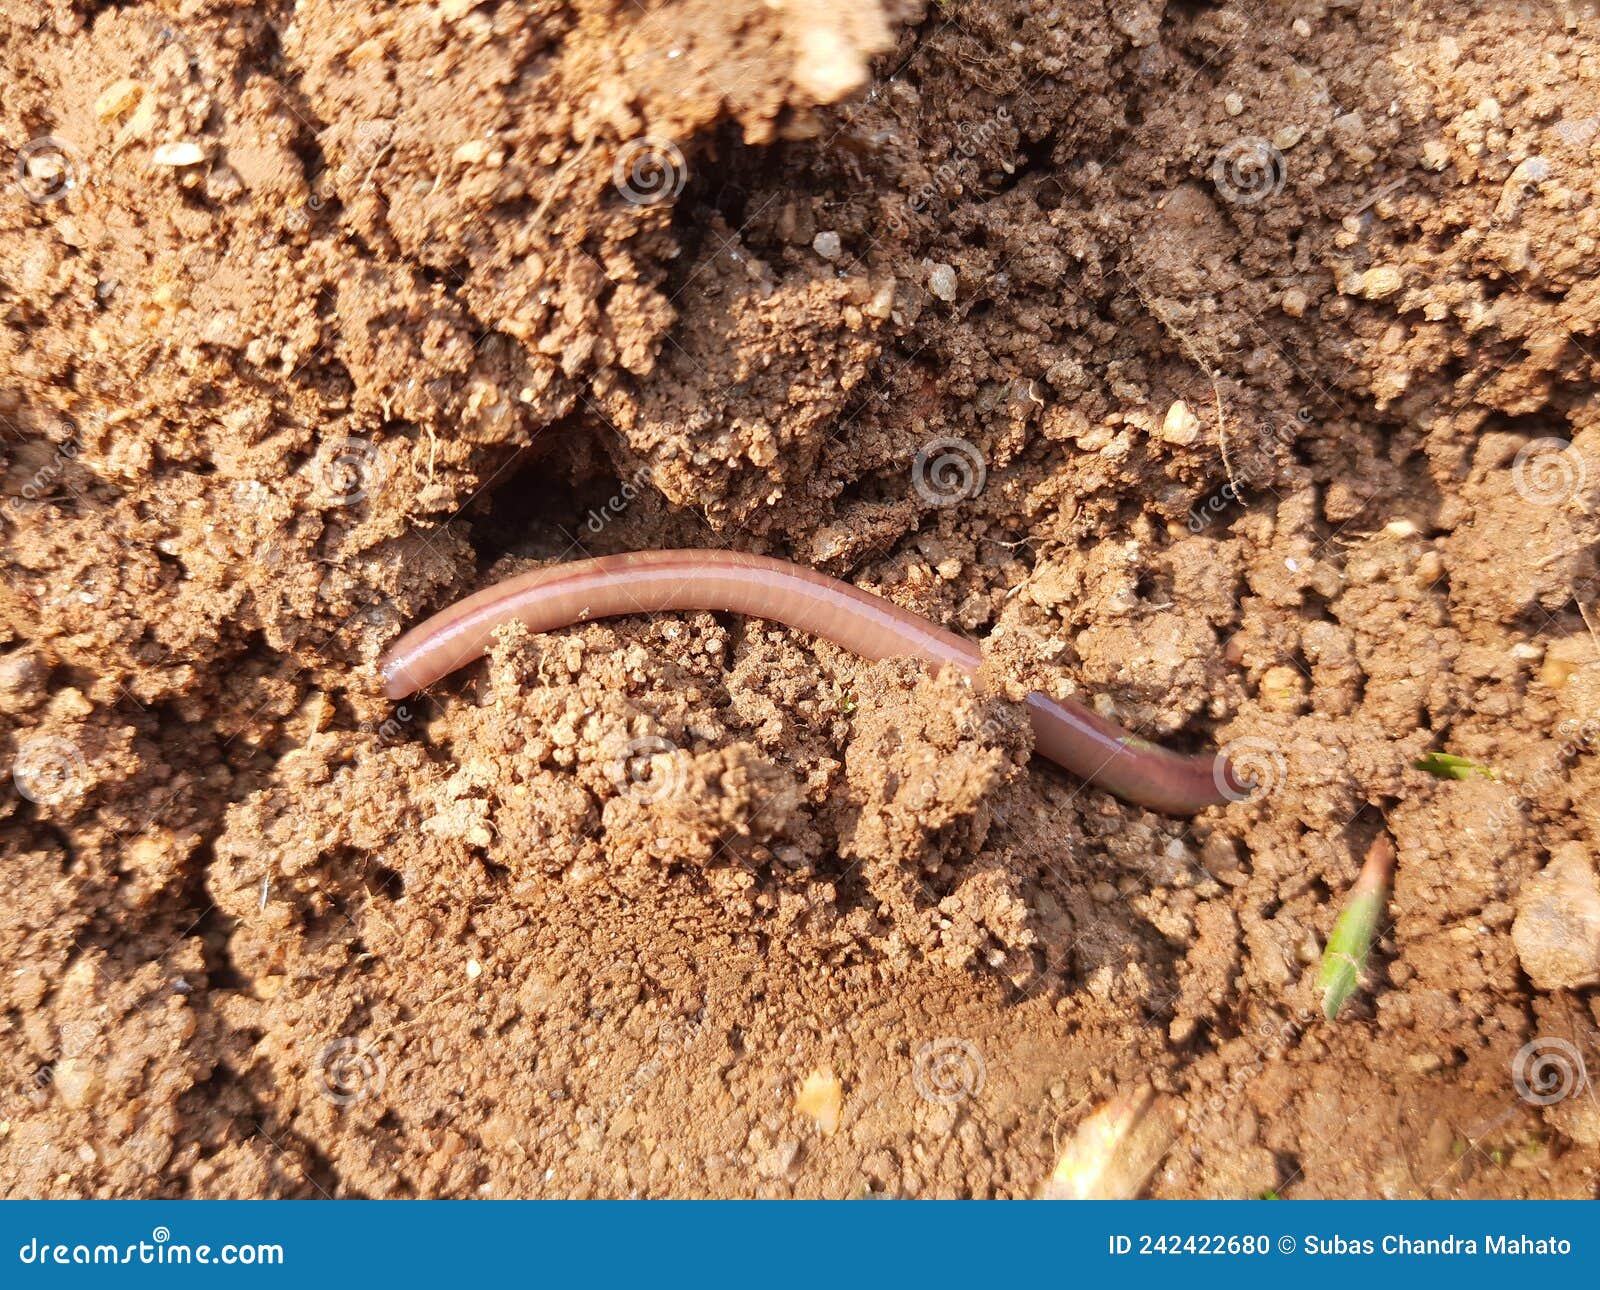 https://thumbs.dreamstime.com/z/earthworm-soil-a-earthworm-is-terrestrial-invertebrate-belongs-to-phylum-annelida-found-all-over-world-242422680.jpg